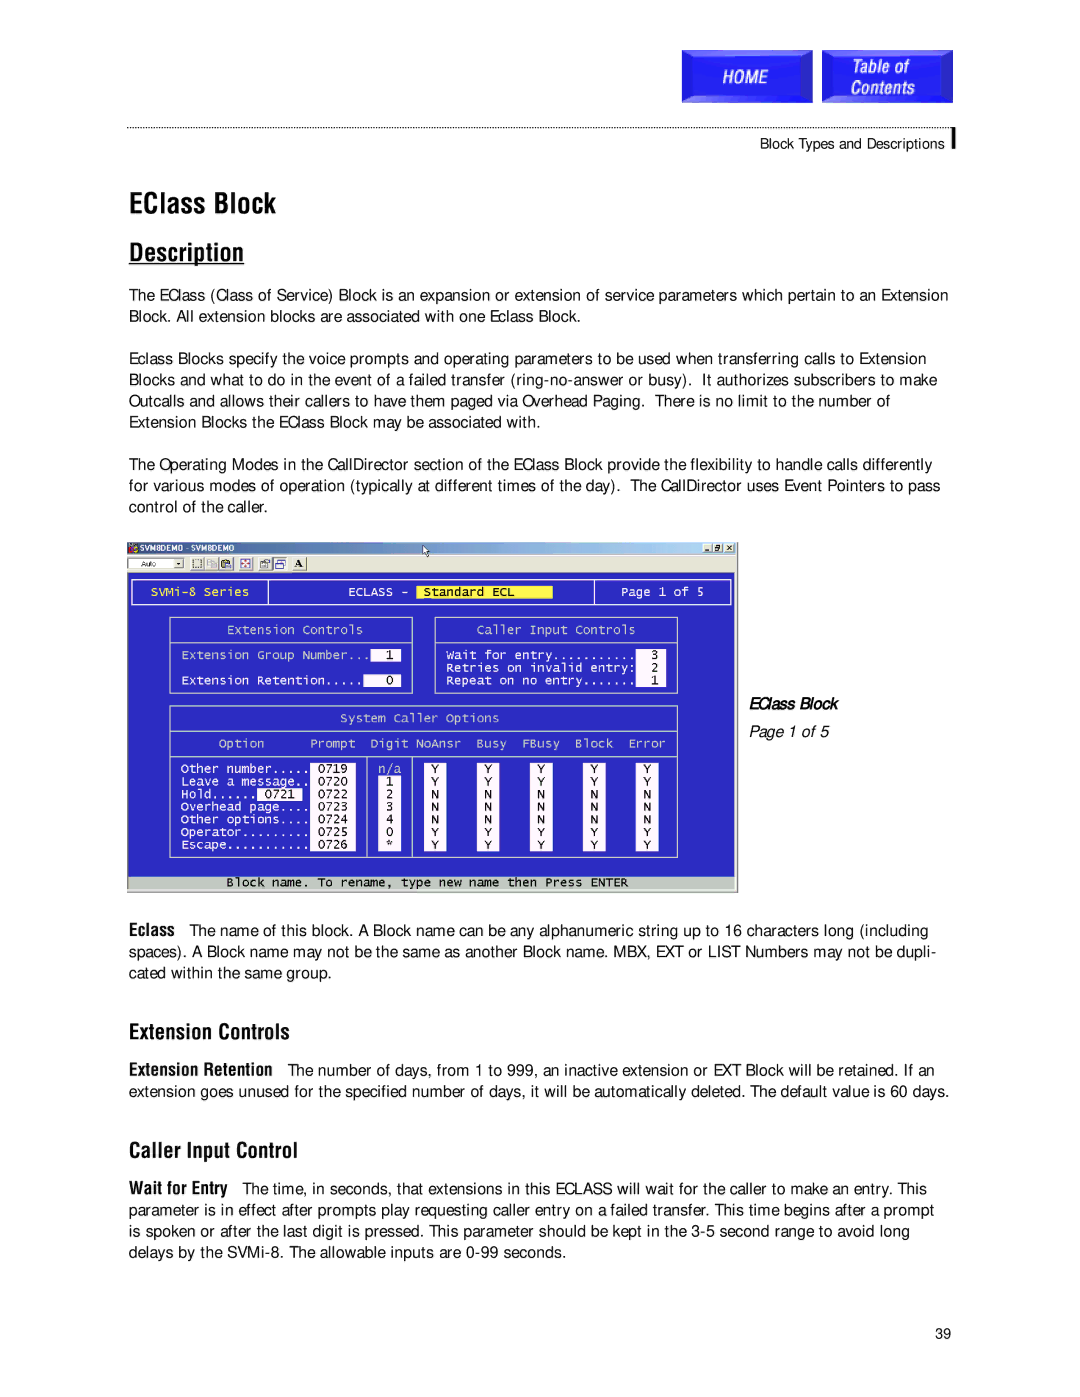 Samsung SVMi-8 technical manual EClass Block, Extension Controls, Caller Input Control 